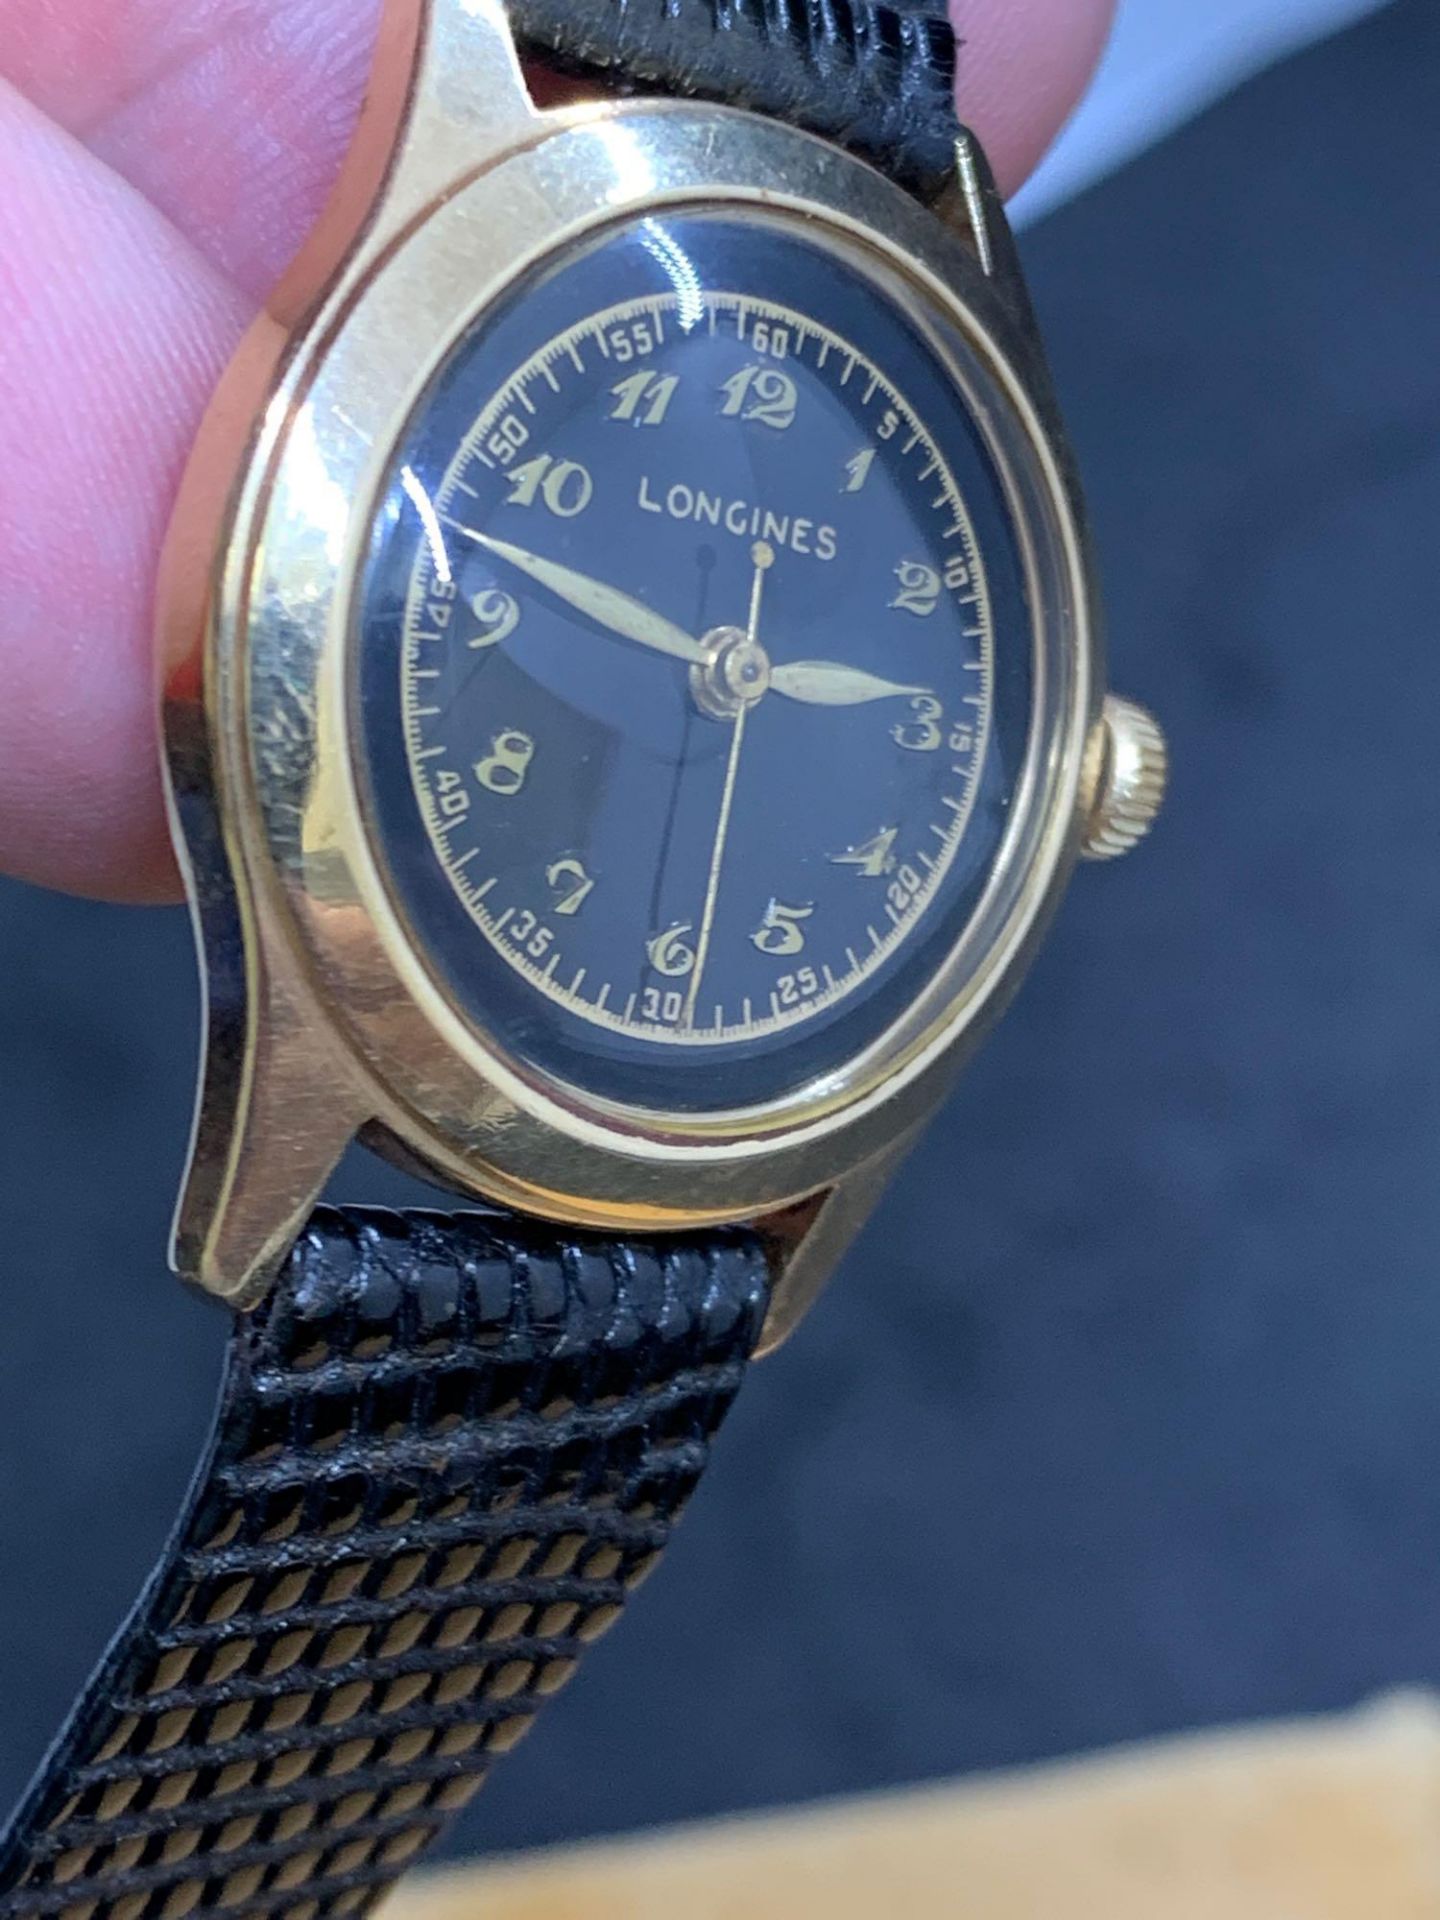 32mm 14k Gold Longines watch Manual wind Screw back - Image 3 of 5